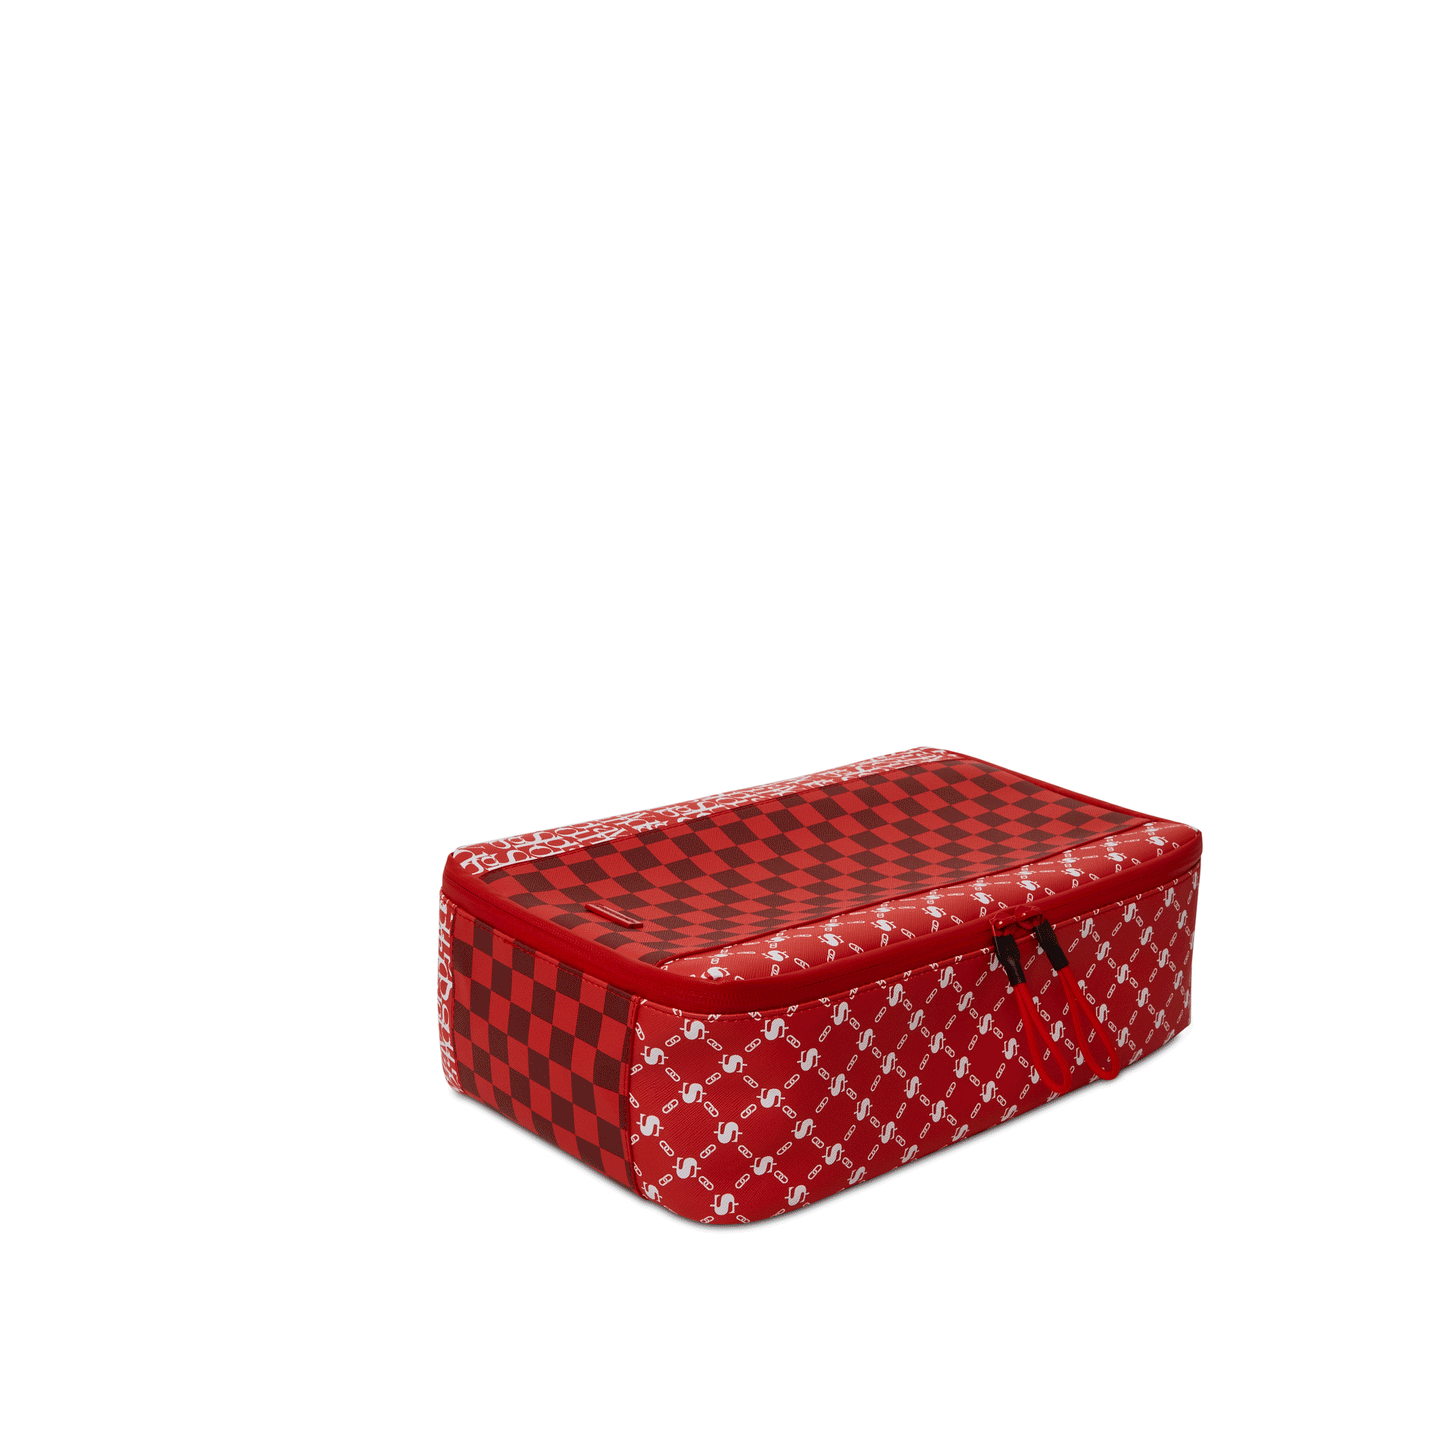 SPRAYGROUND 'Tri Split Red Monte Carlo' Backpack (Red) 910B4513NSZ99000